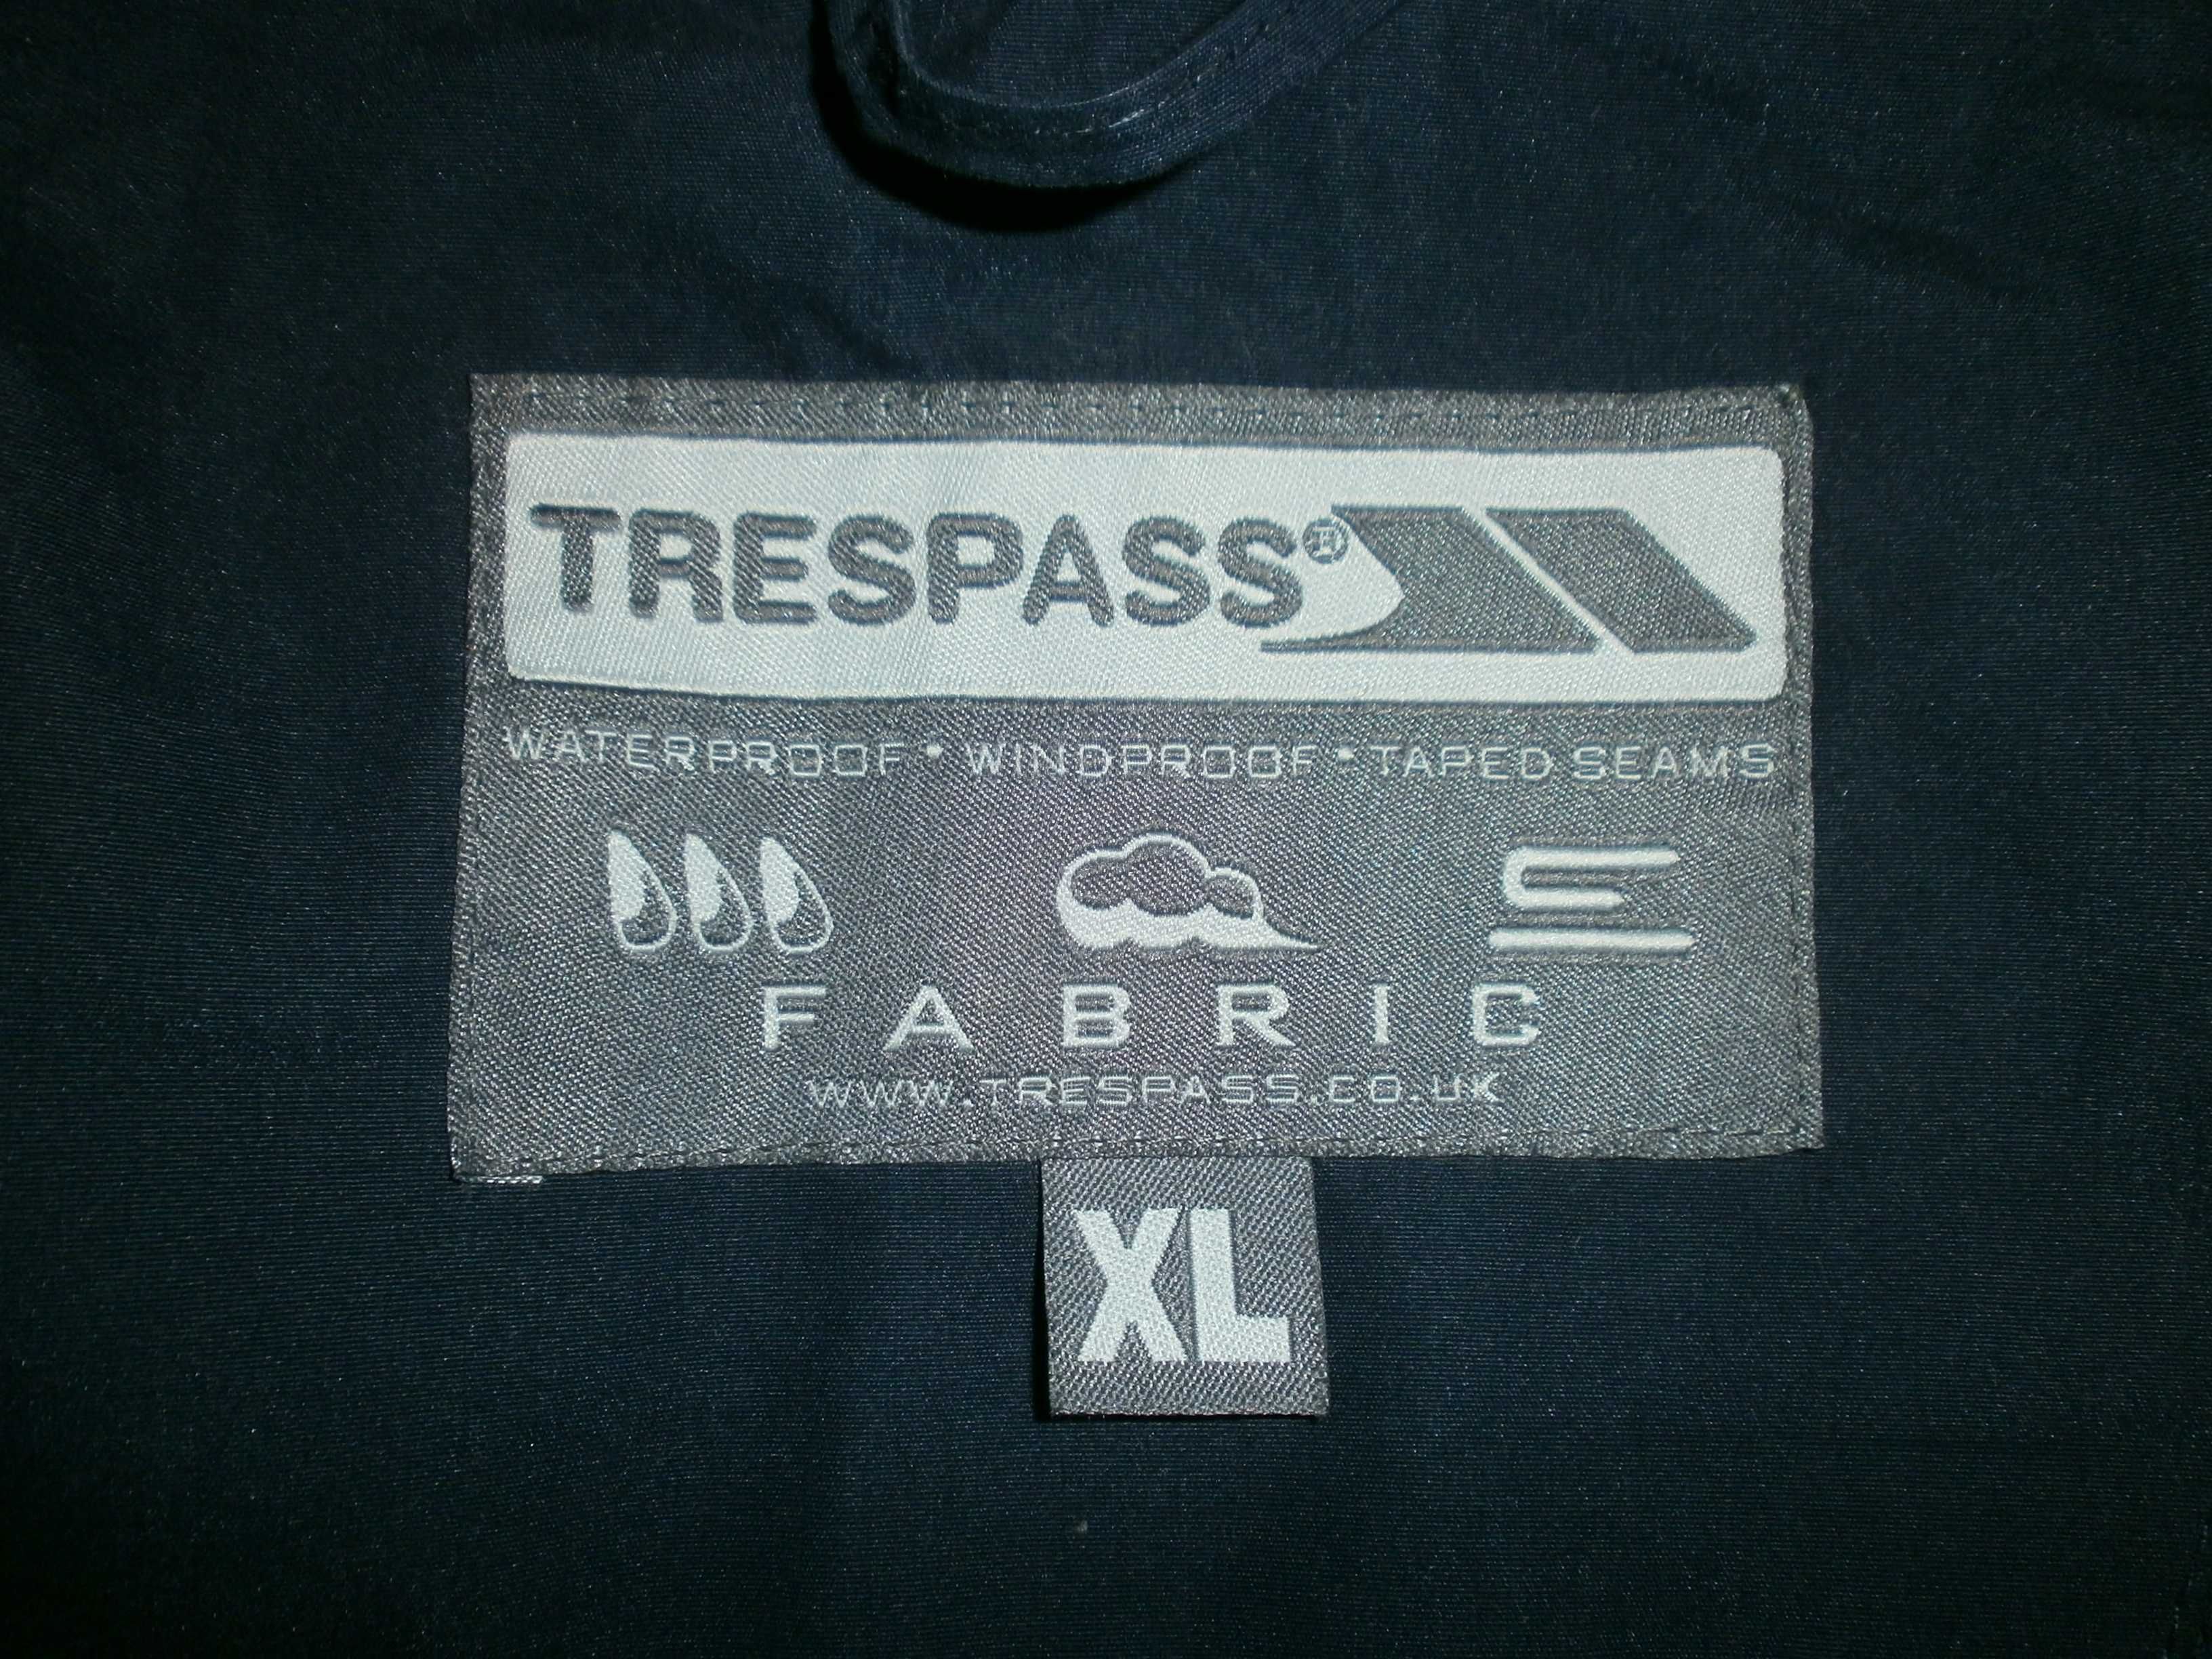 Куртка Trespass, синяя, разм. XL, наш 56. ПОГ-70 см